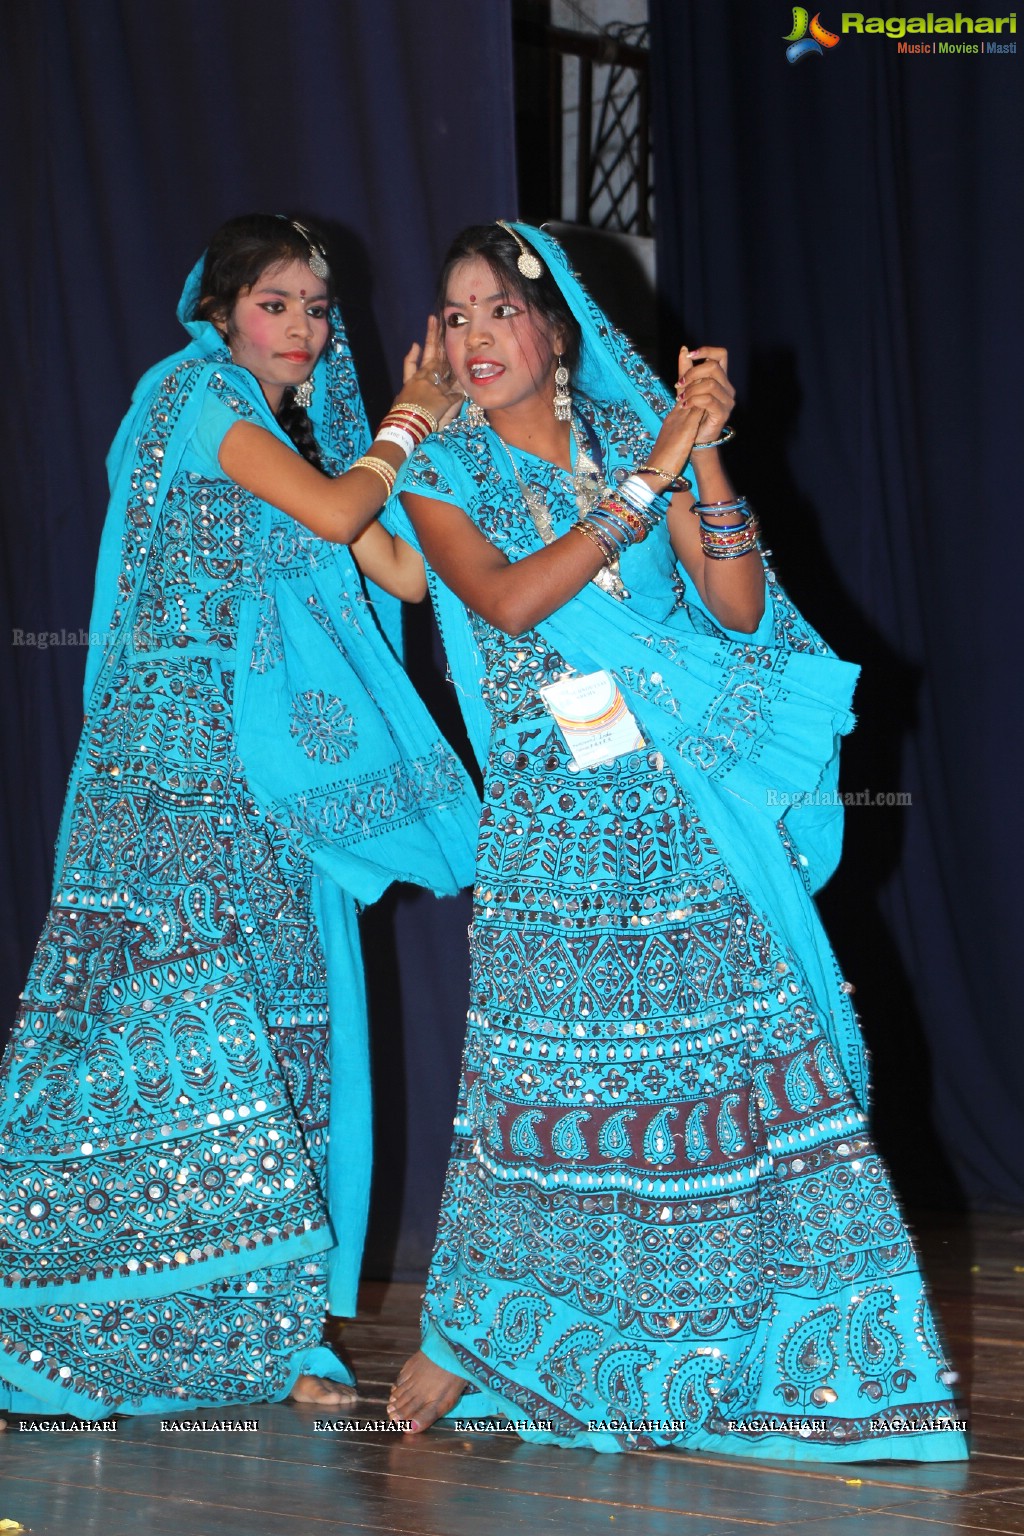 Jalwa-2015 Inter College Cultural Festival